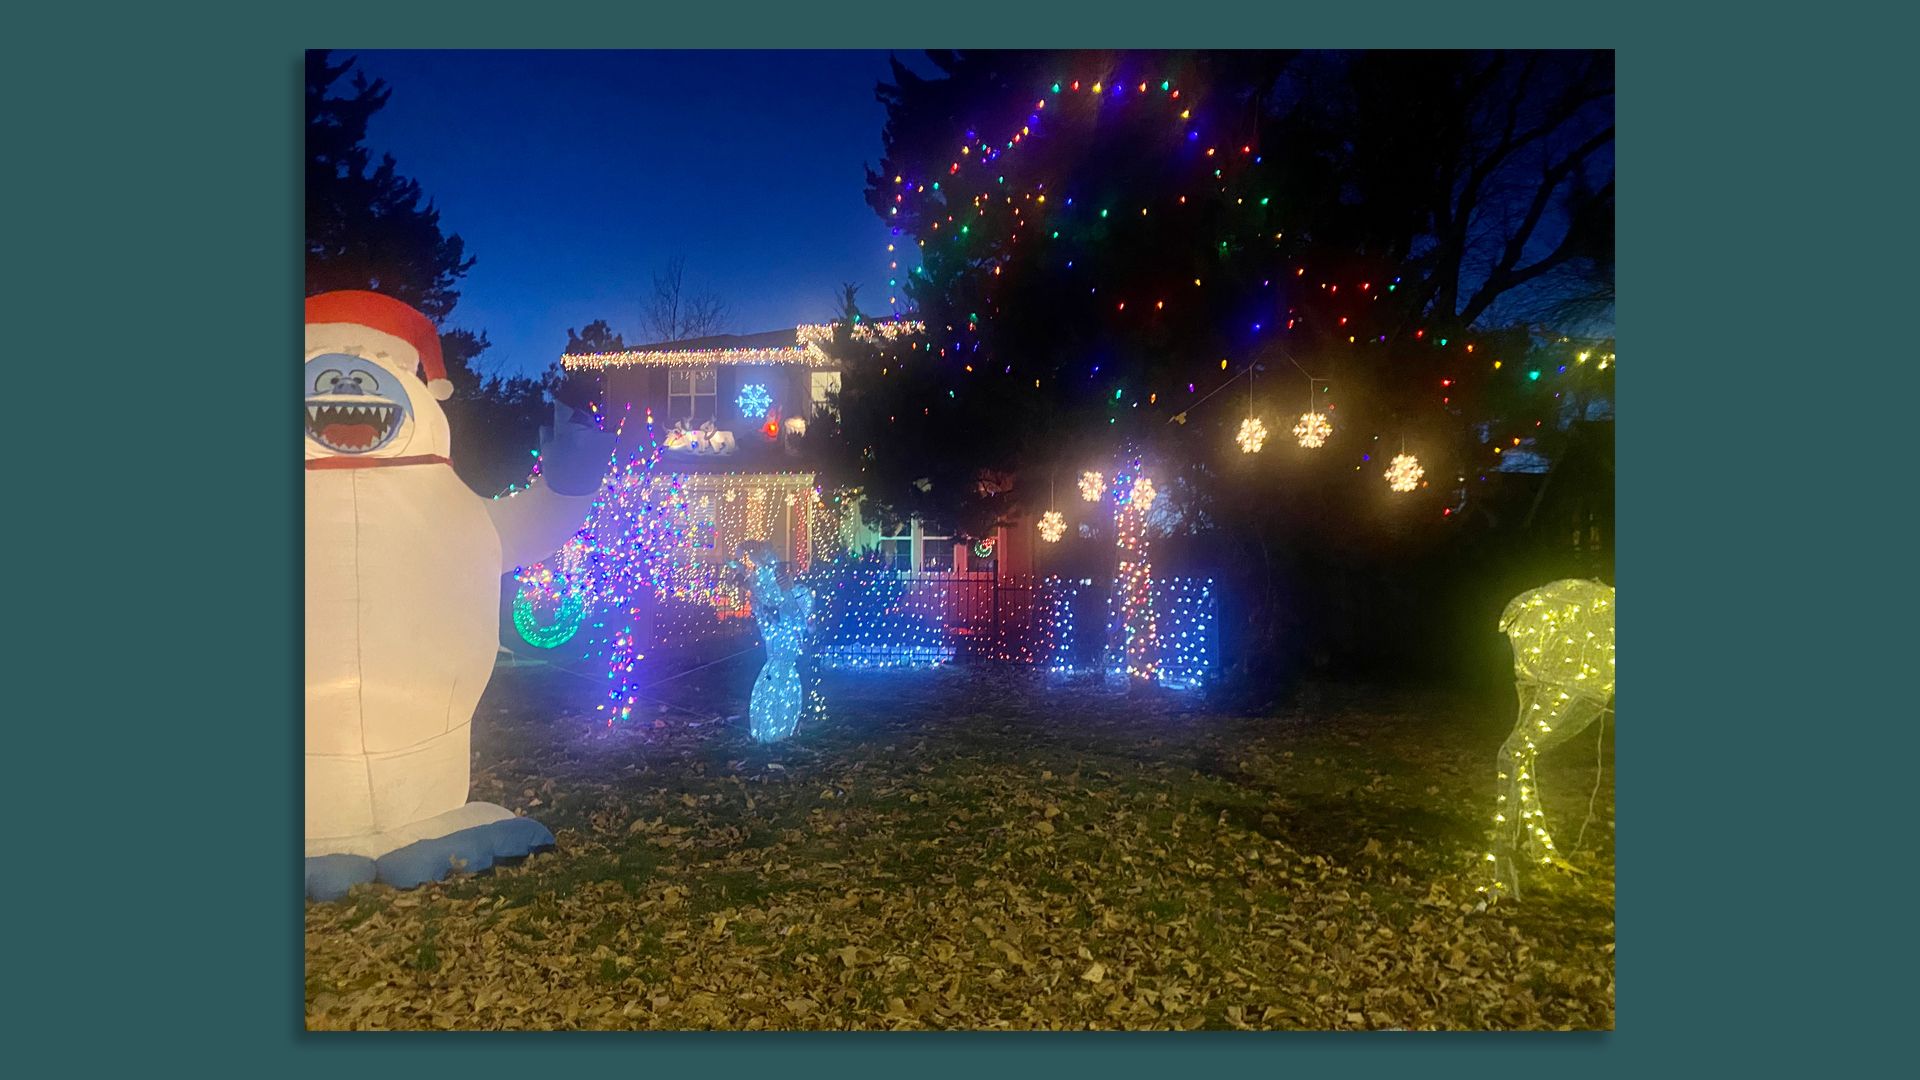 Denver's Hale neighborhood. House with Christmas lights.